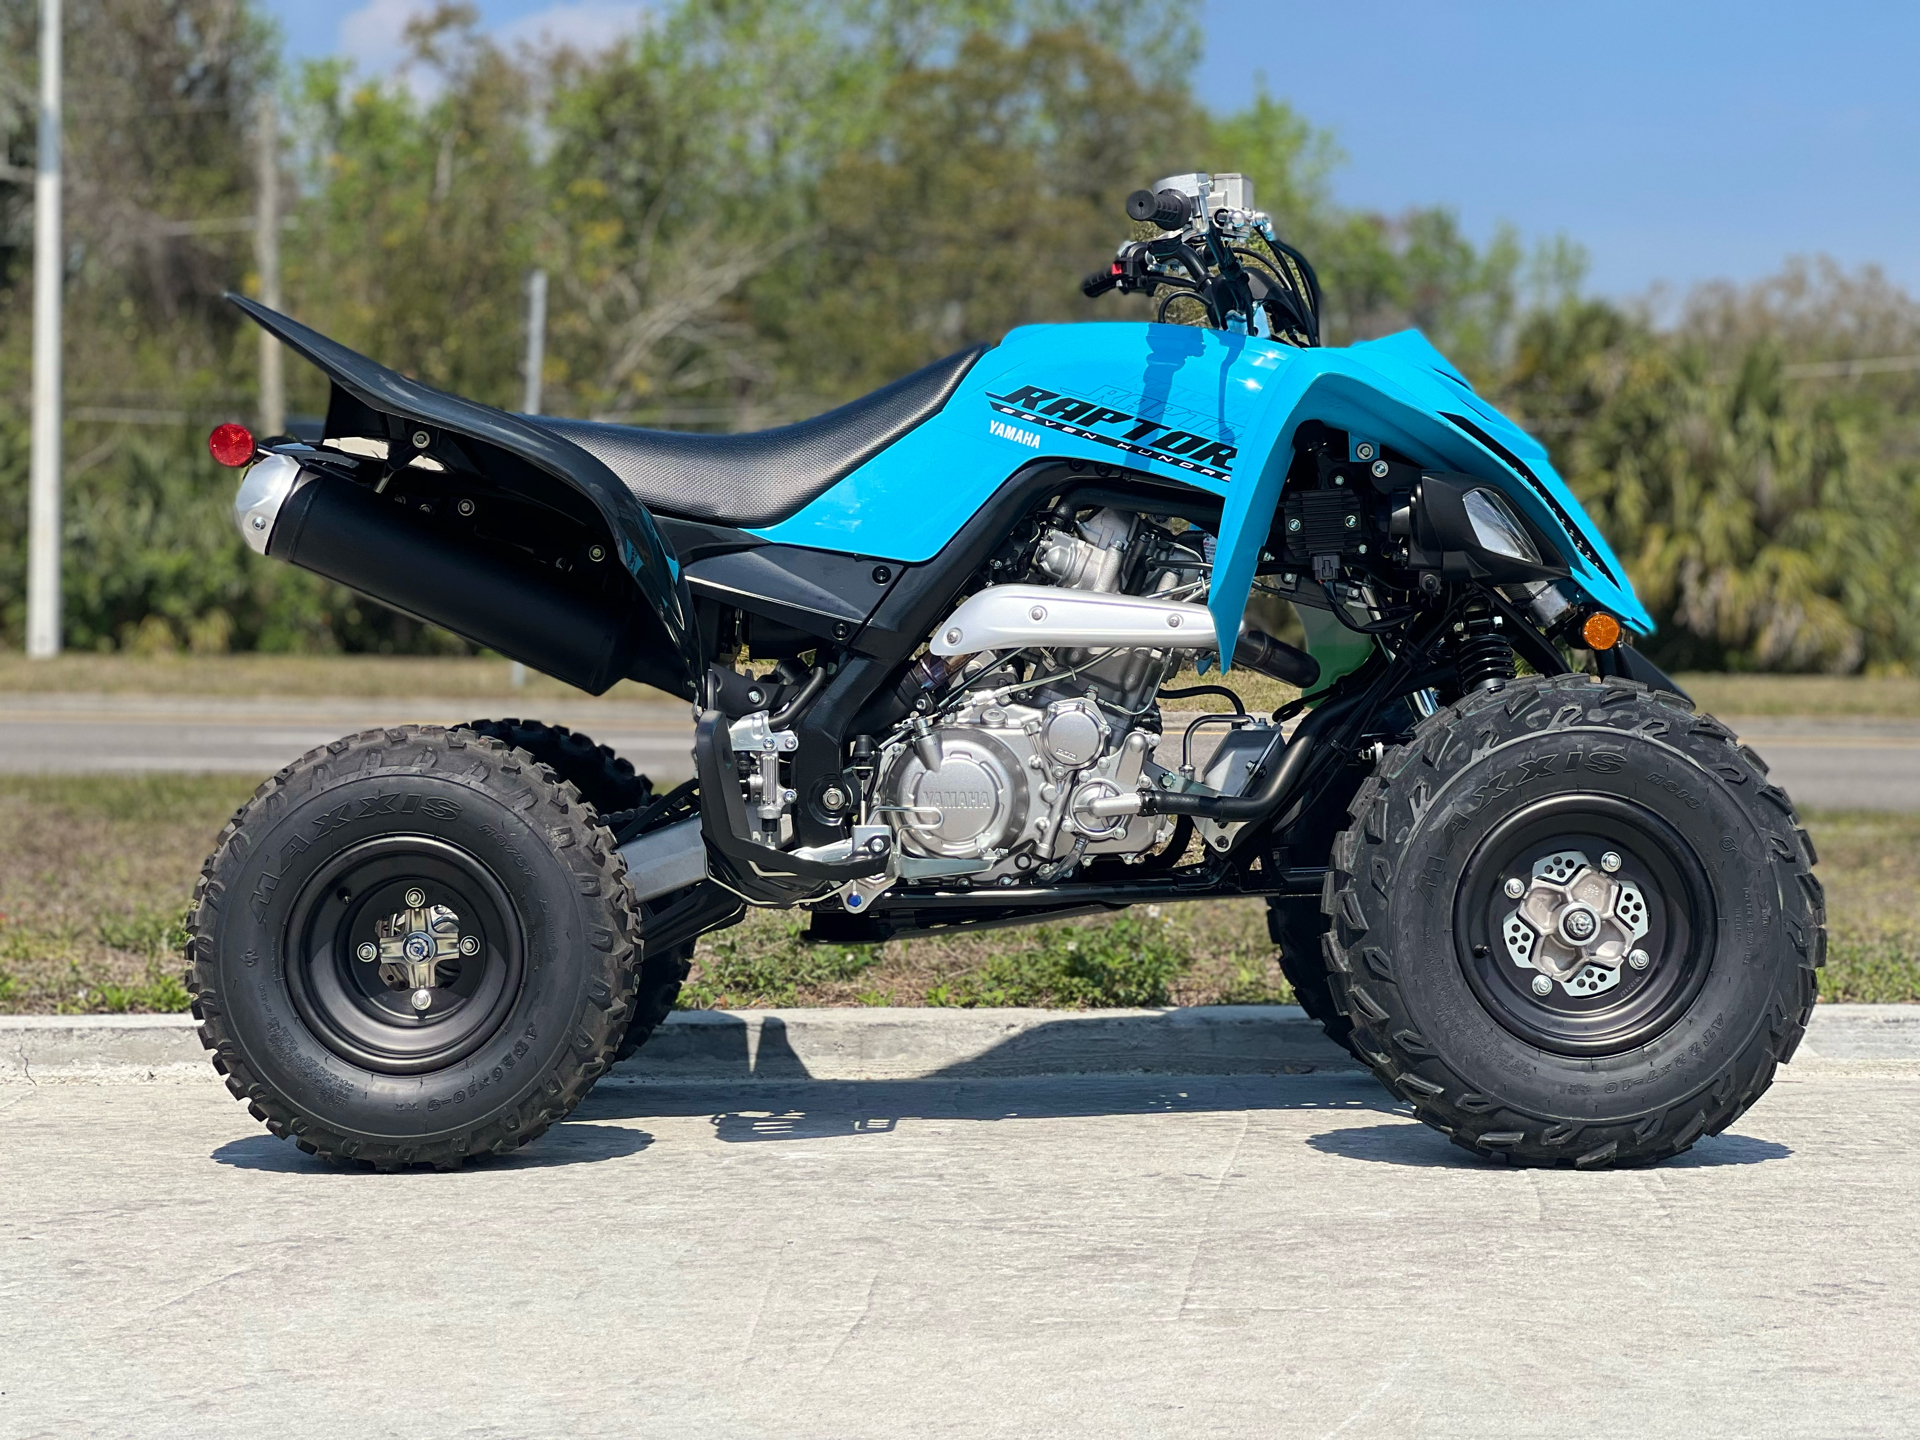 2023 Yamaha Raptor 700 in Orlando, Florida - Photo 6